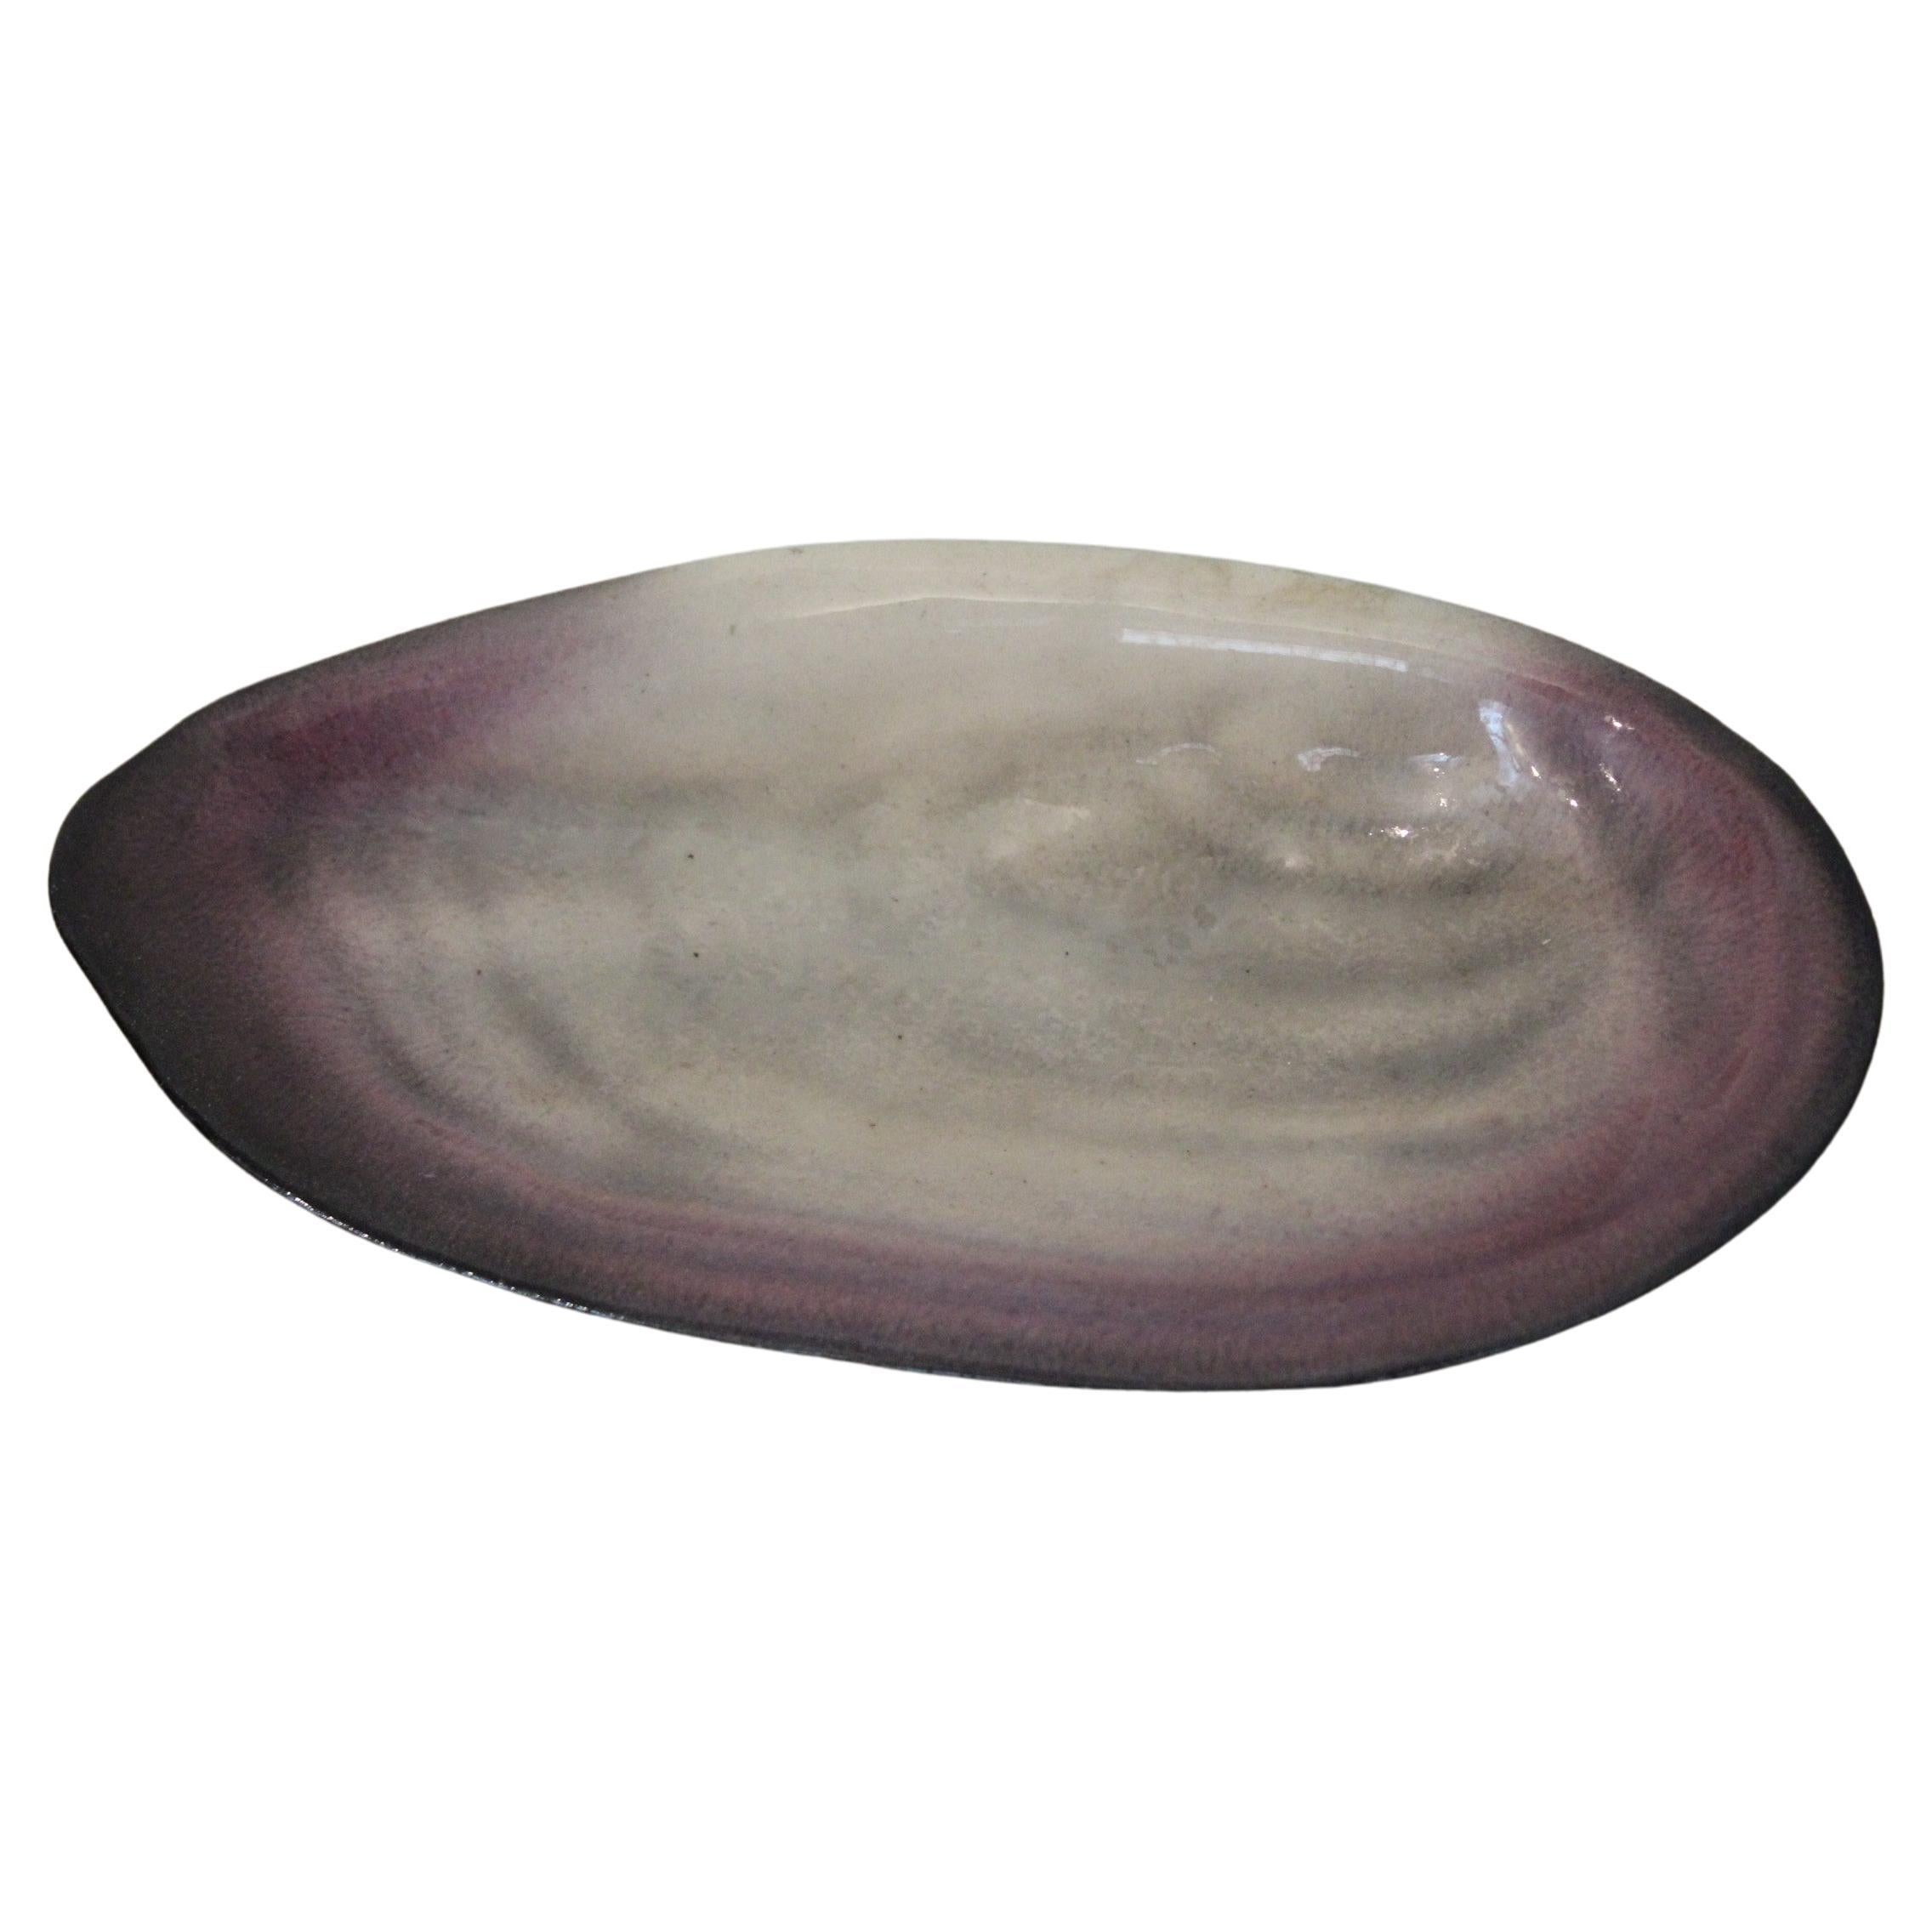 Ceramic shell dish by Pol Chambost